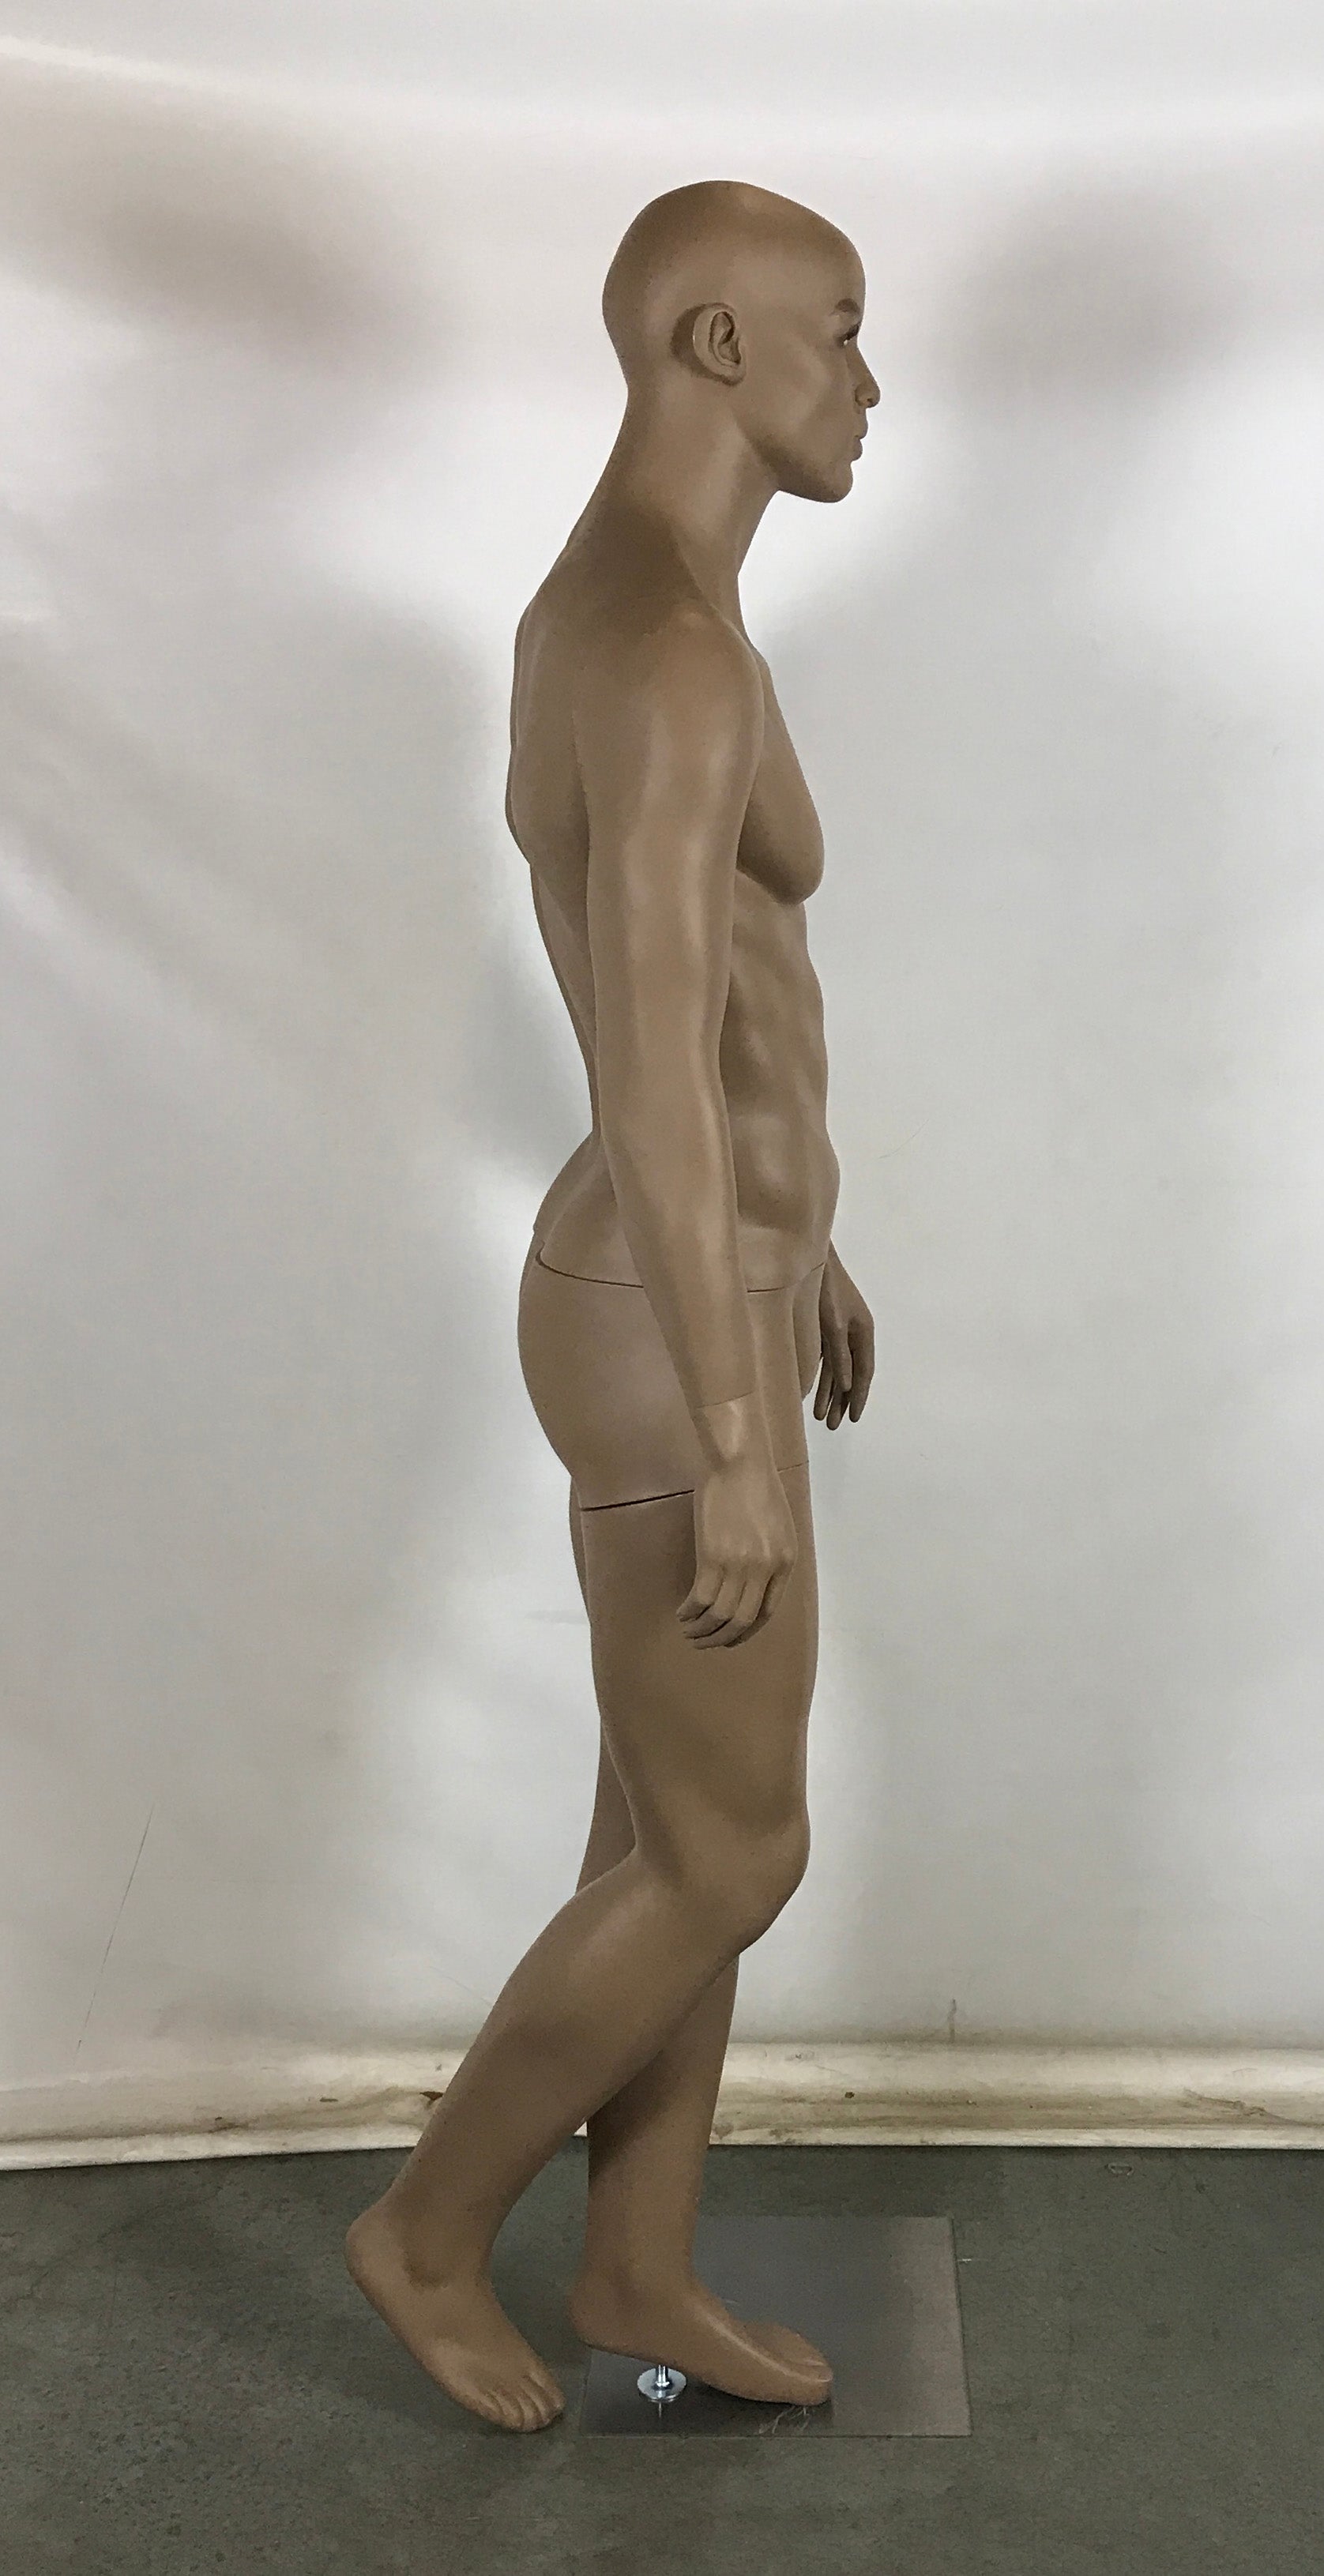 Mannequin with Bent Leg